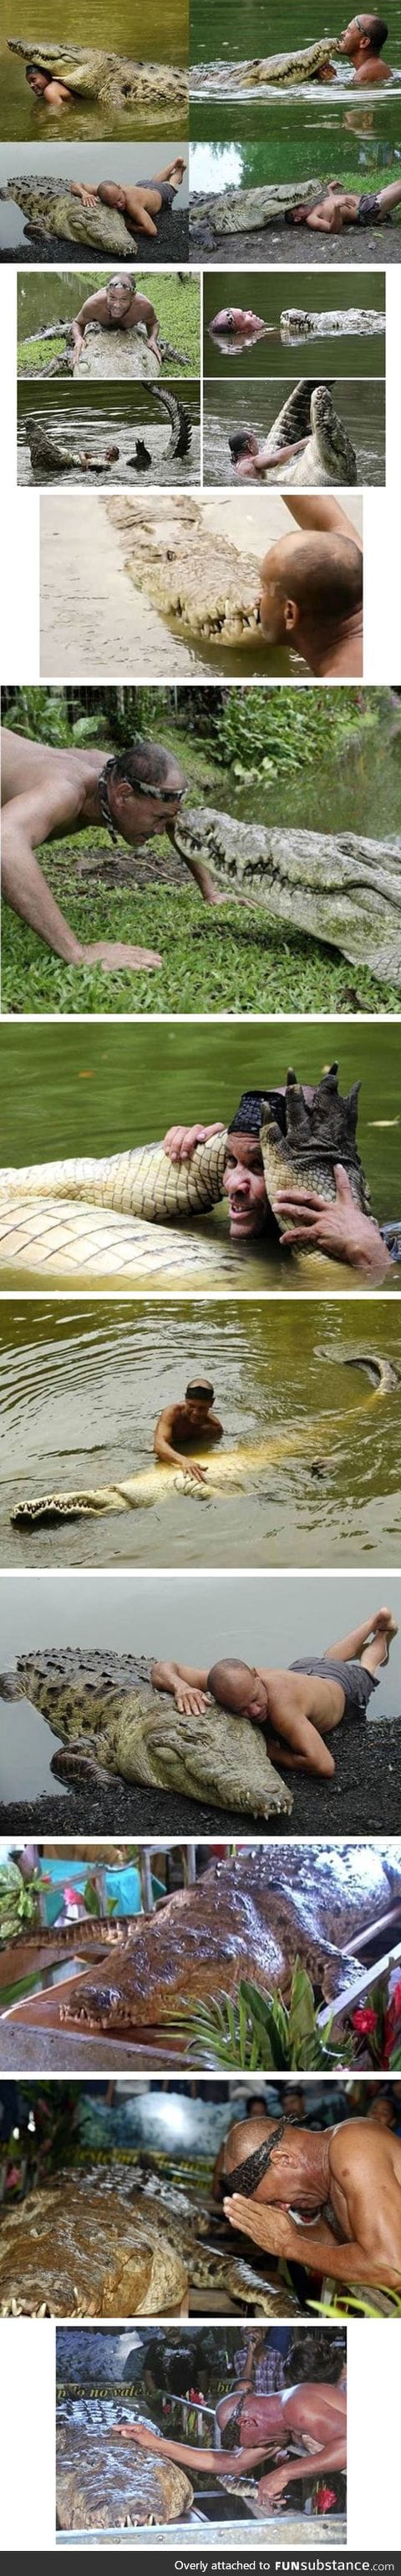 Poncho, the friendly crocodile